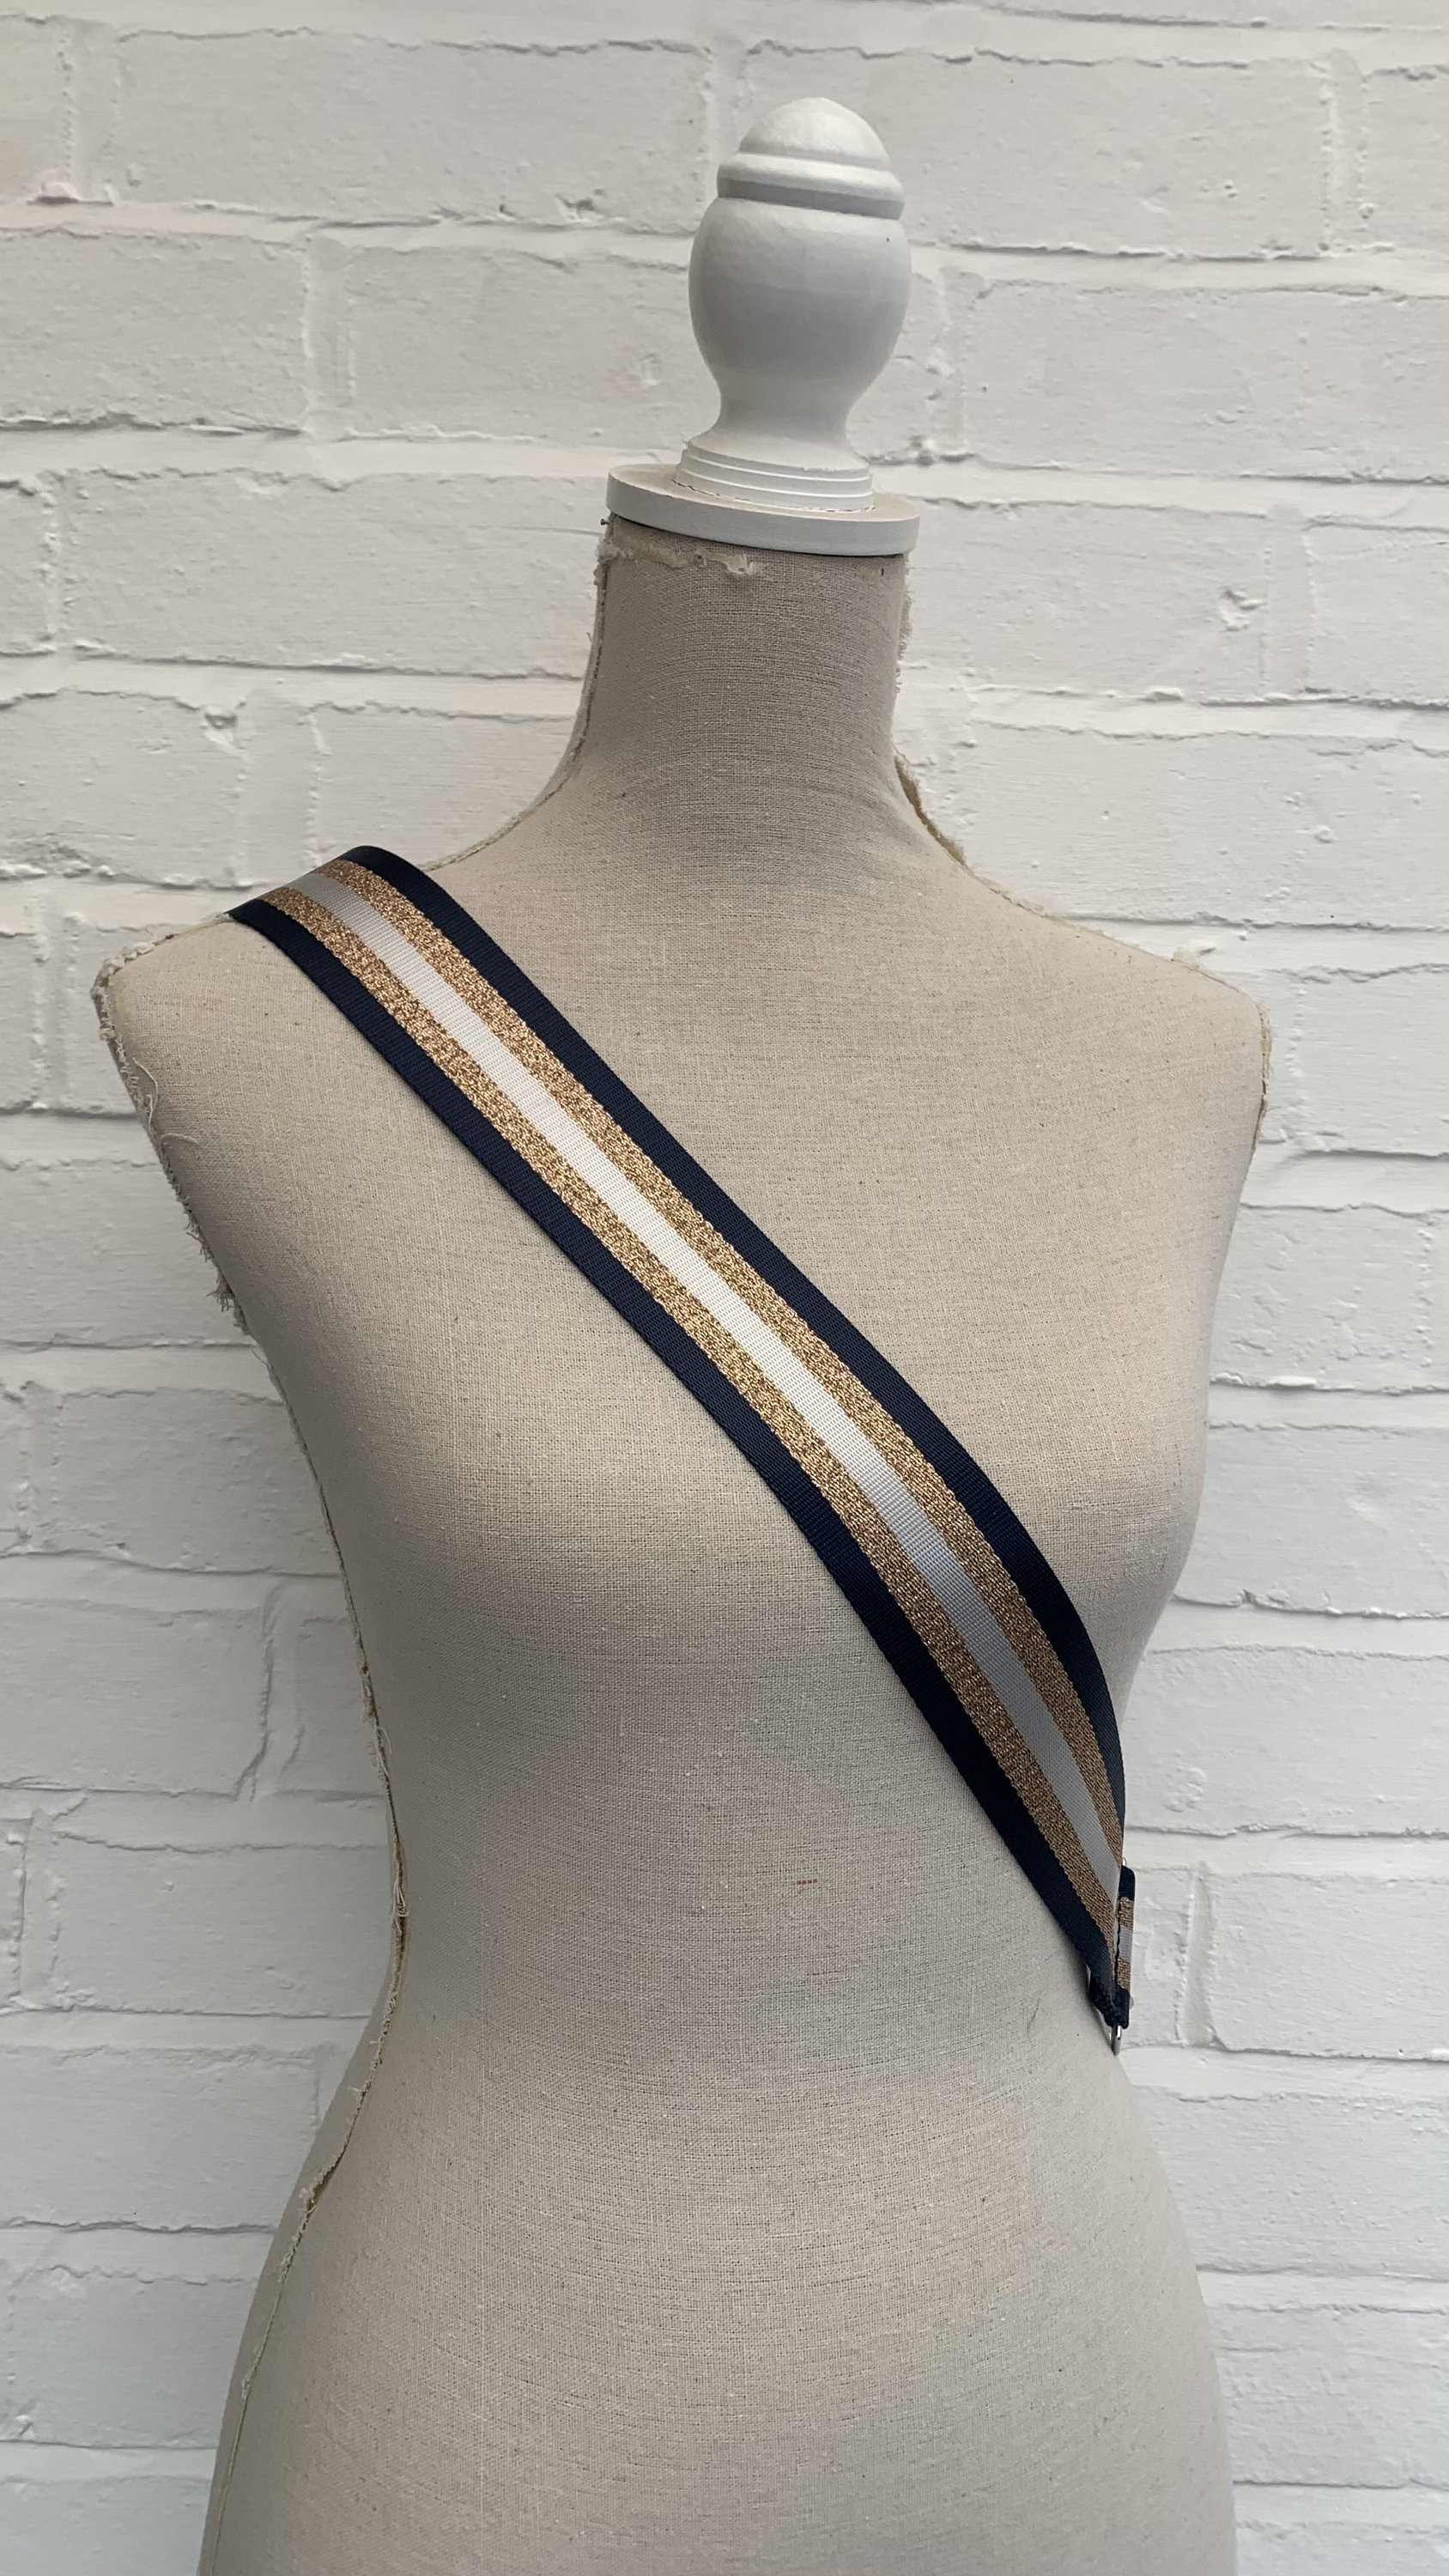 D-Luxe Double Stripe Bag Strap — Black/Gold